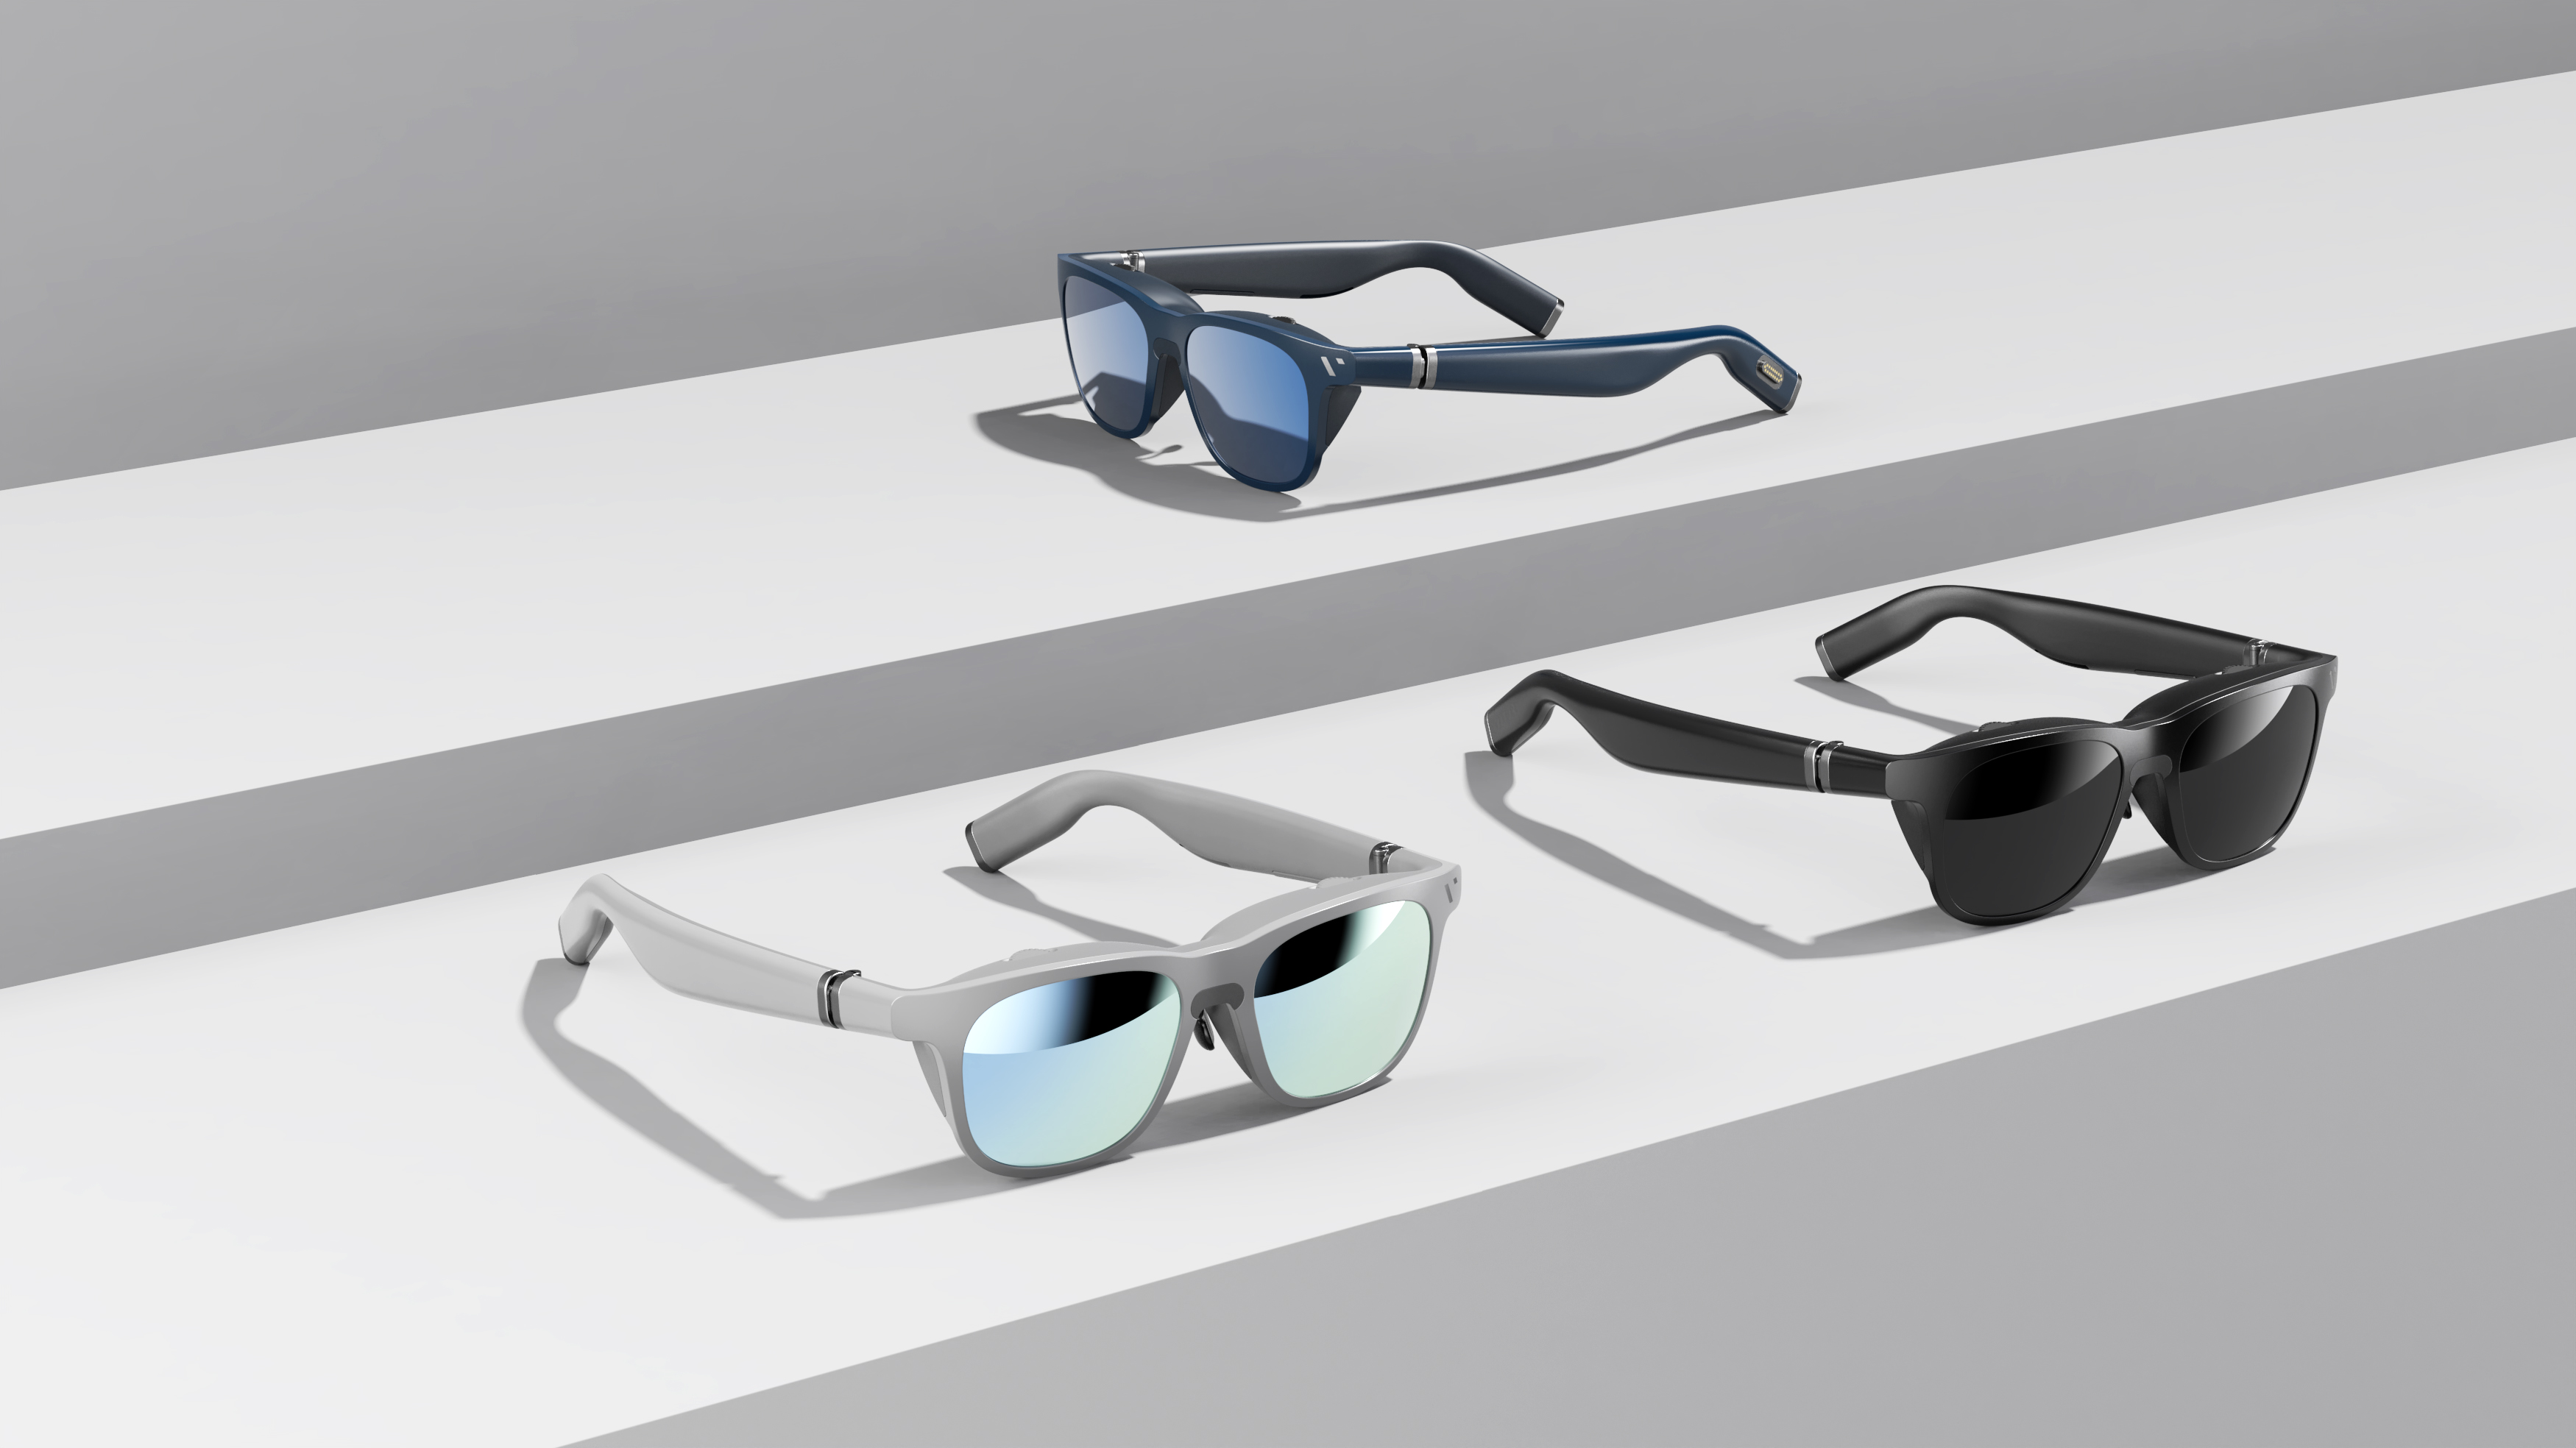 Viture One XR glasses just raised more on Kickstarter than the